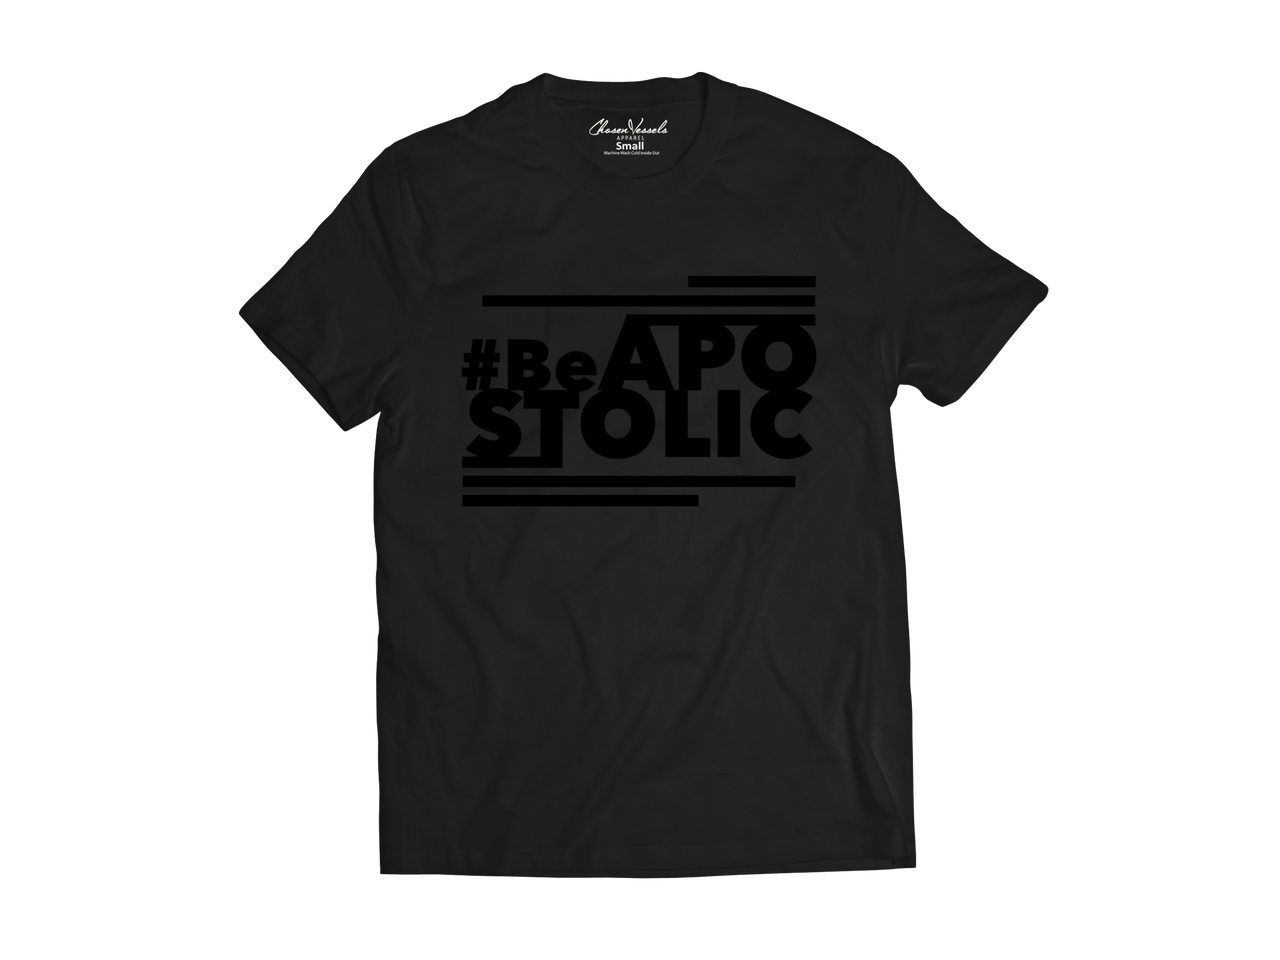 Be Apostolic Black on Black (Limited Edition)